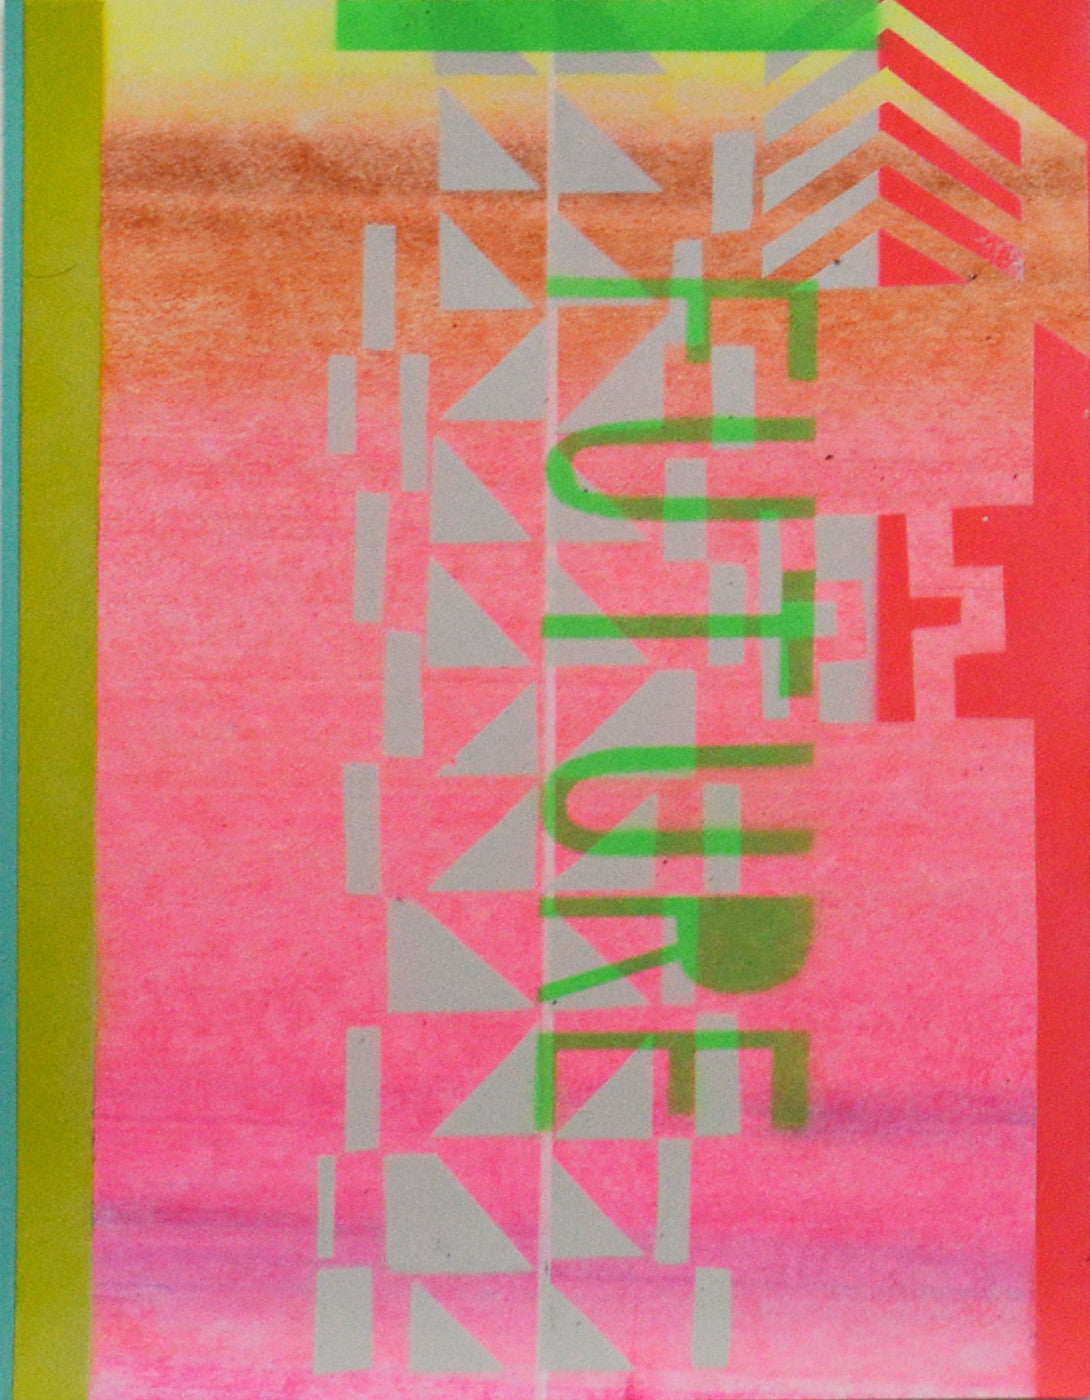 Kristen Schiele, "Future"